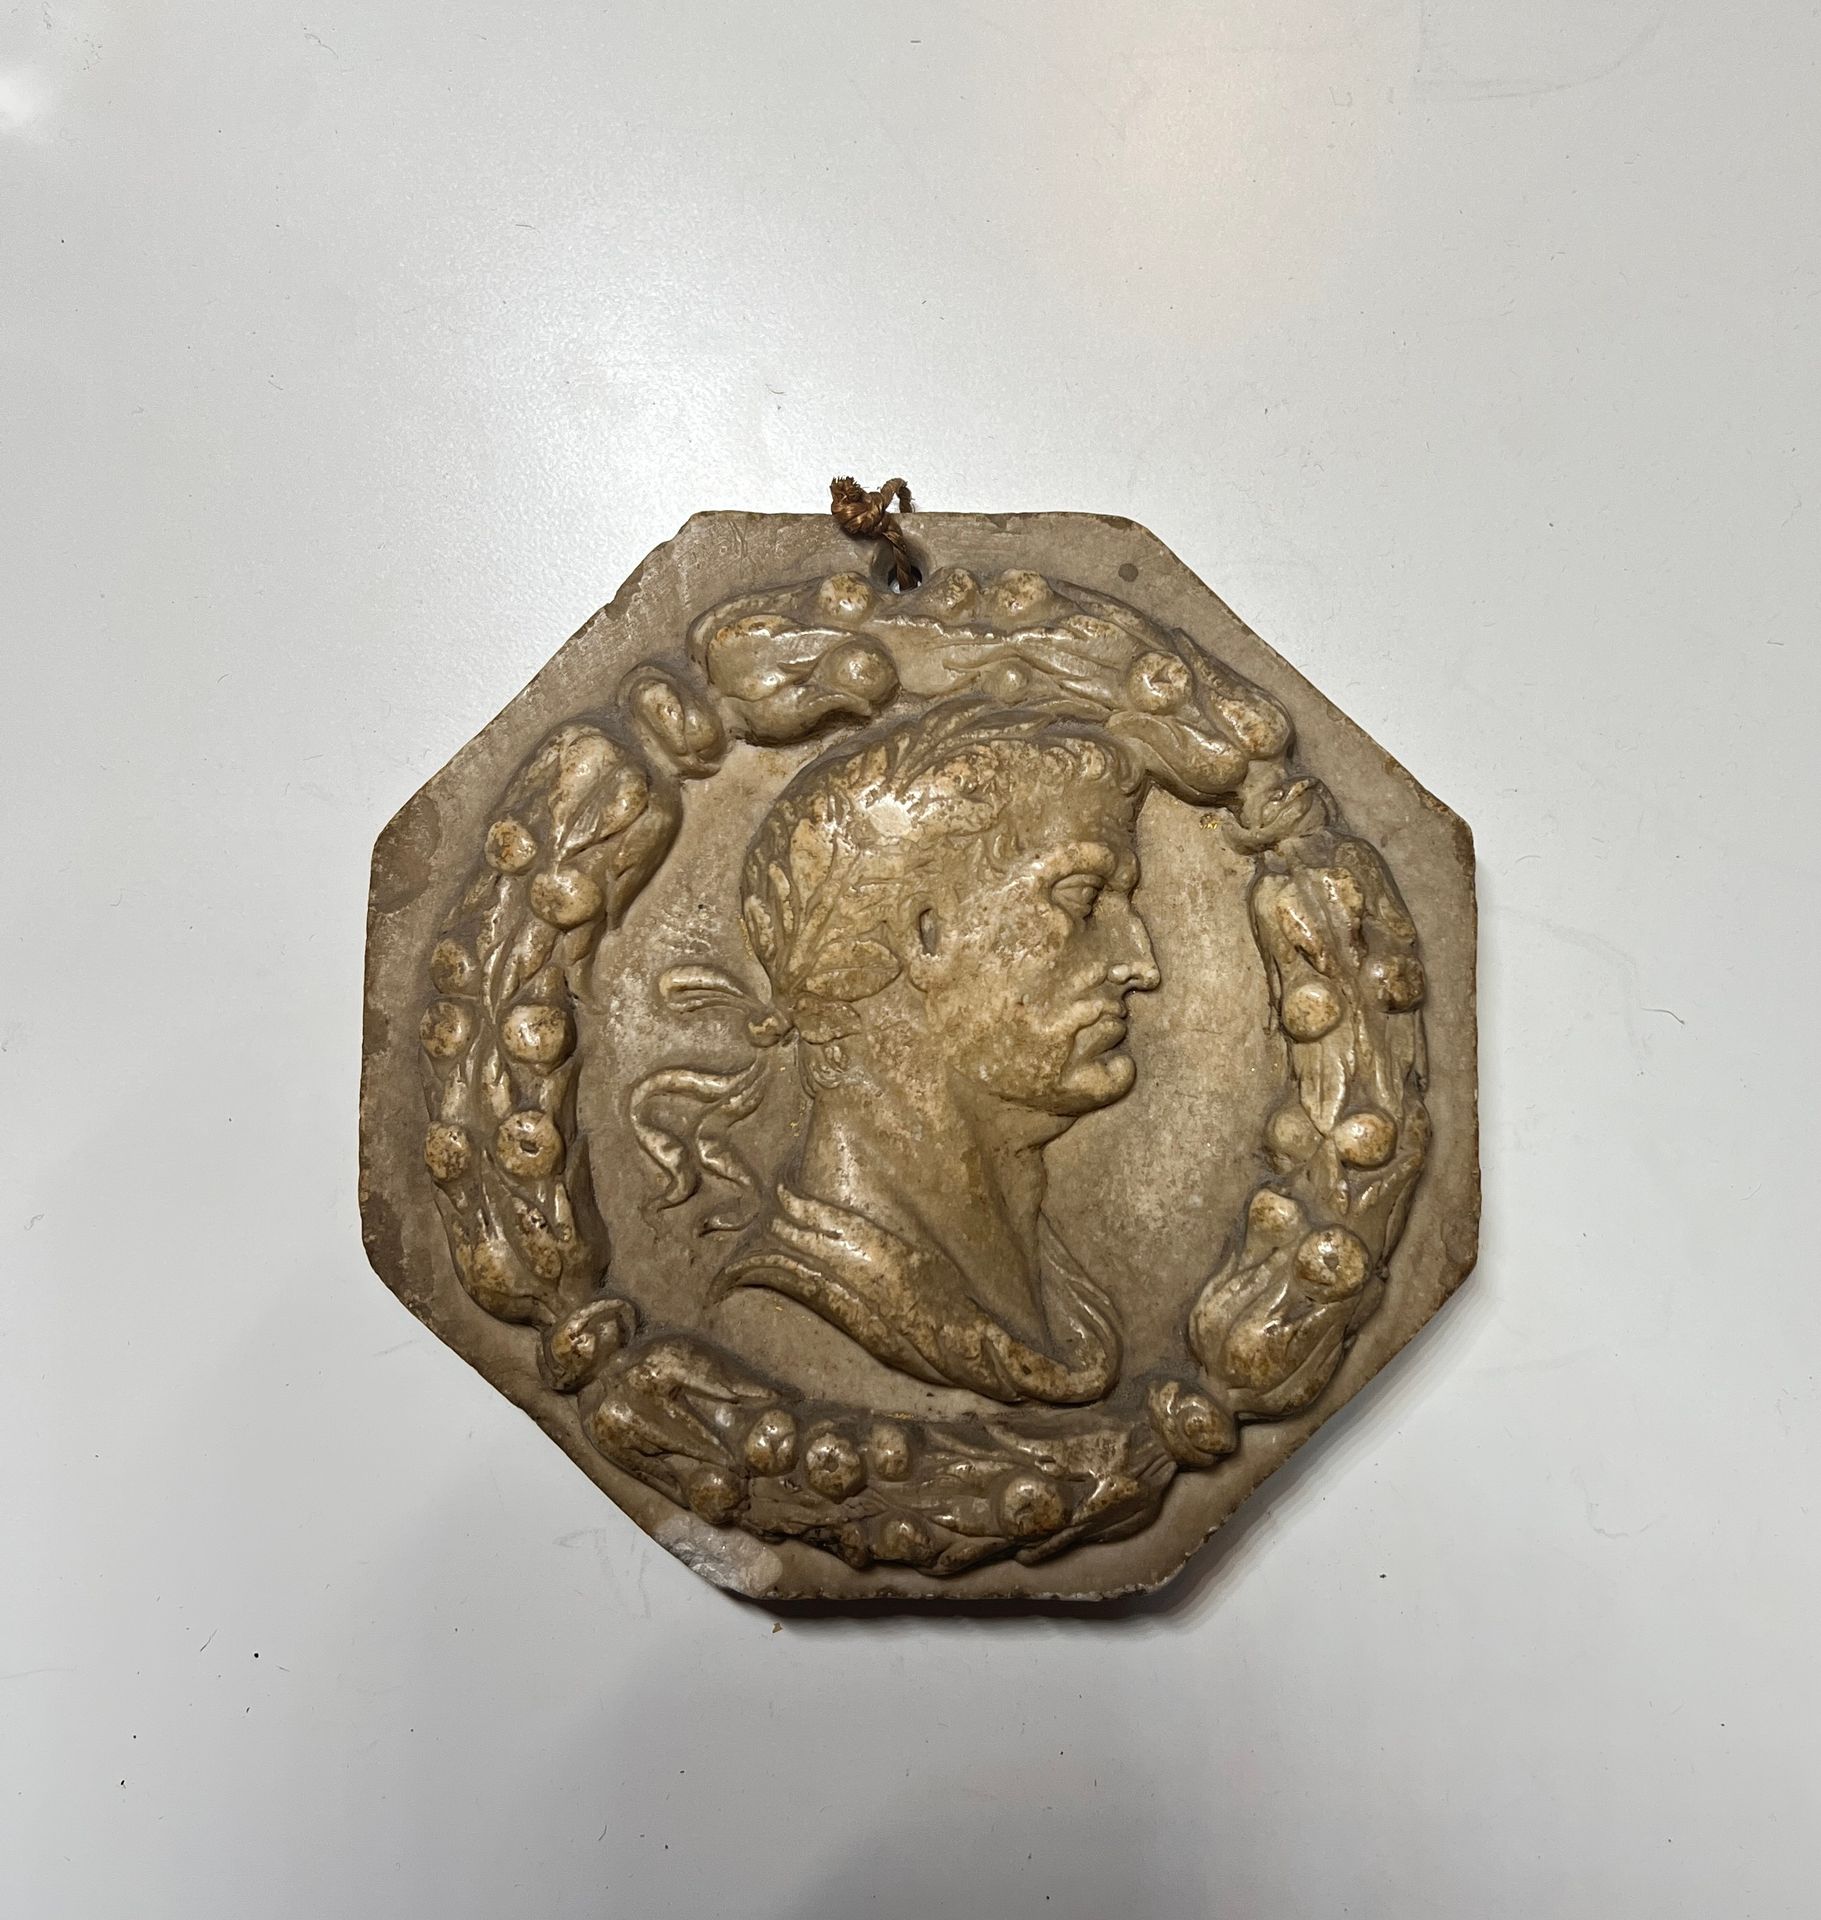 Null 八角形斑驳的大理石纪念章，上面有月桂花环中的罗马皇帝的轮廓。
17-18世纪
长. 12,5 cm
薯片